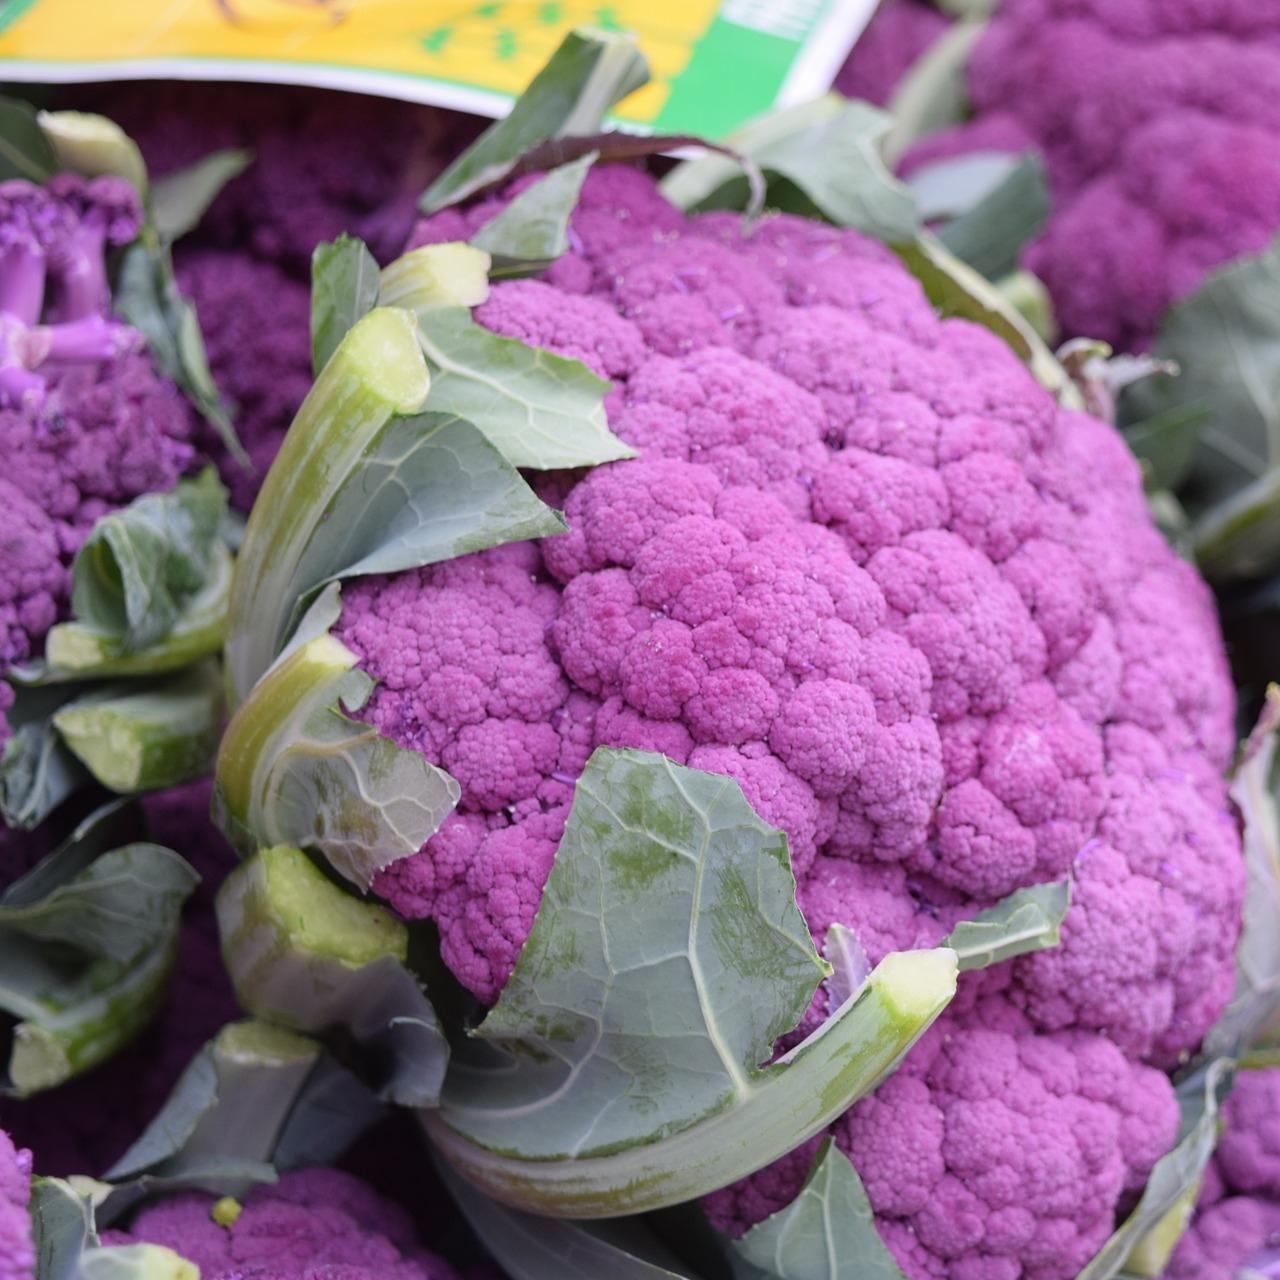 One Purple Cauliflower